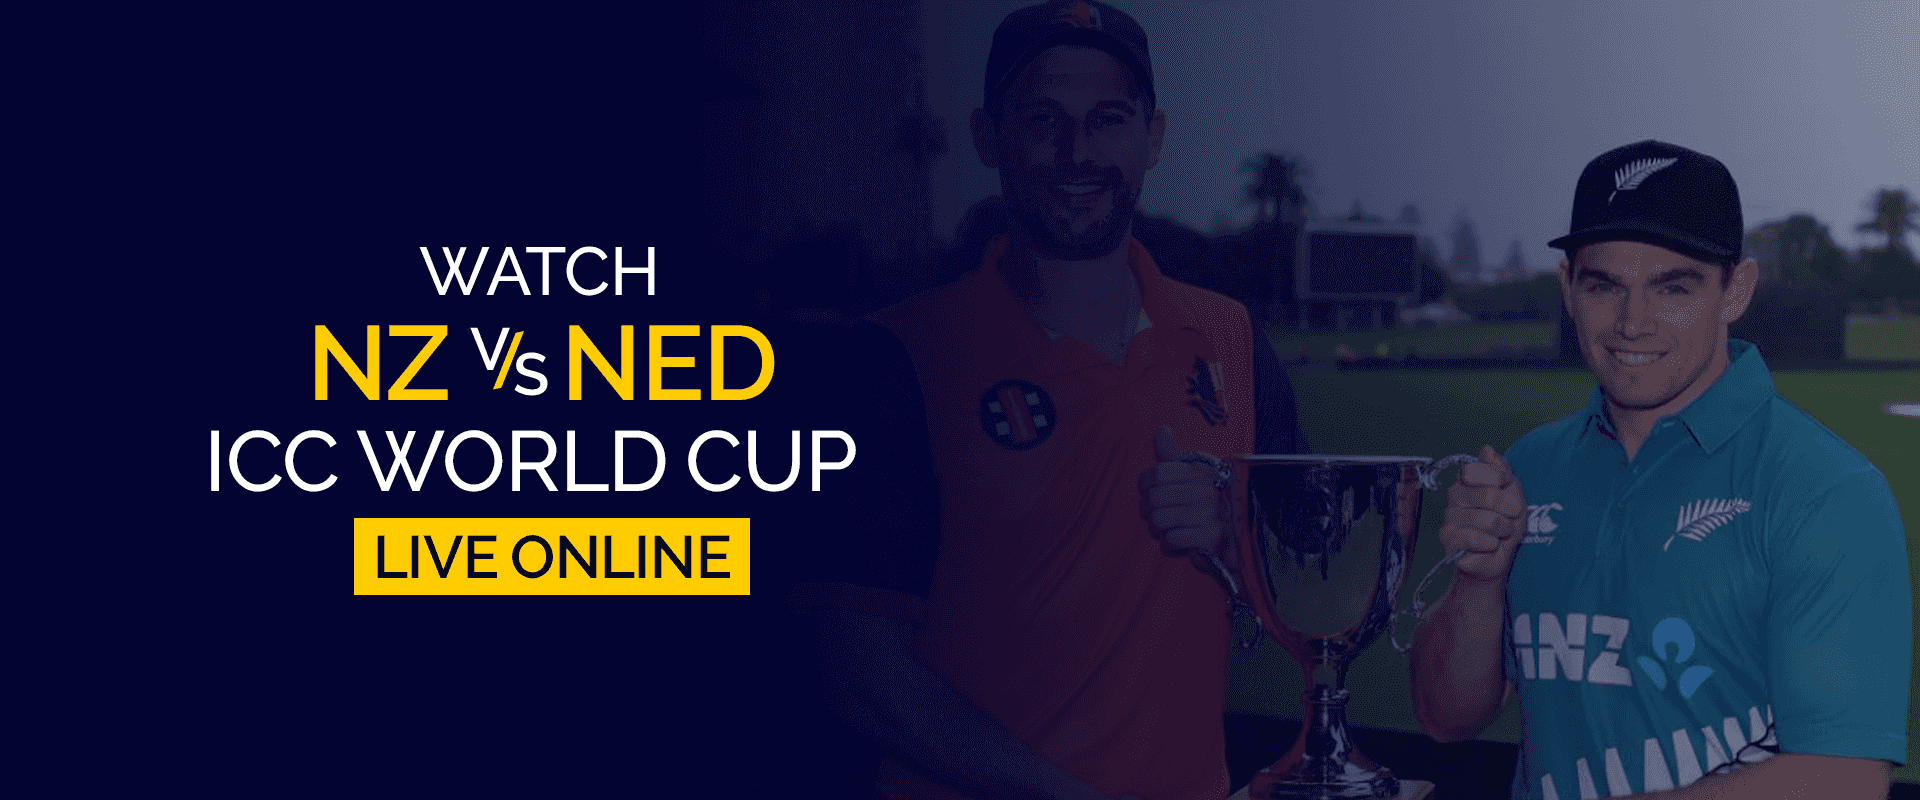 Assistir NZ x NED ICC World Cup ao vivo online